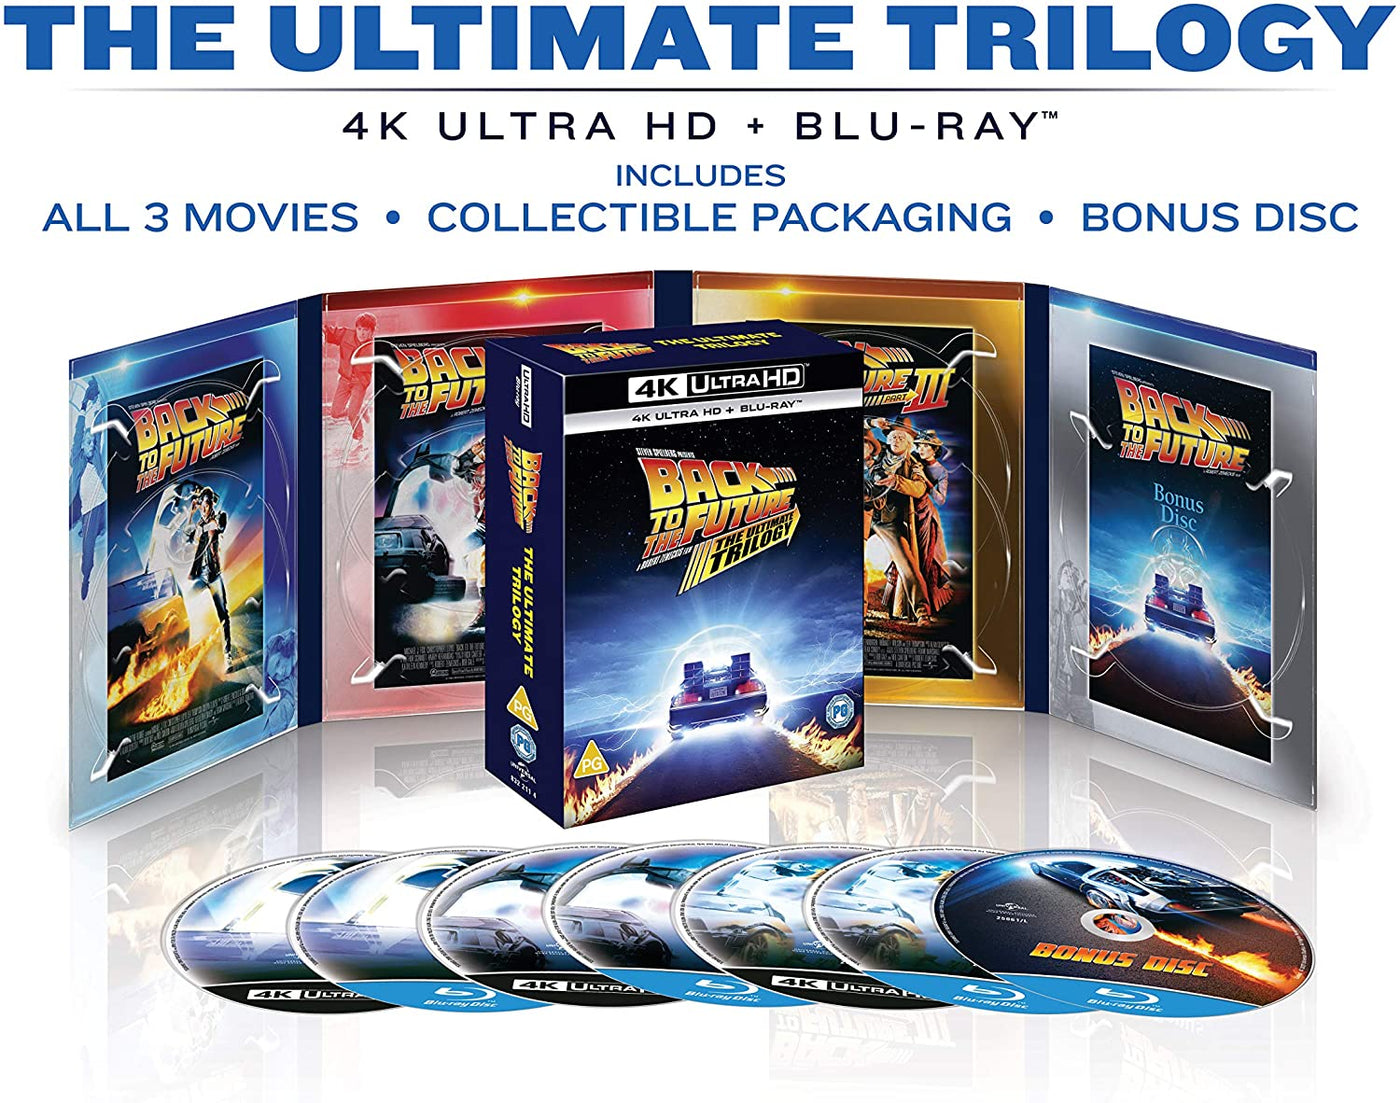 Back To The Future Trilogy (4K Ultra HD + Blu-ray)